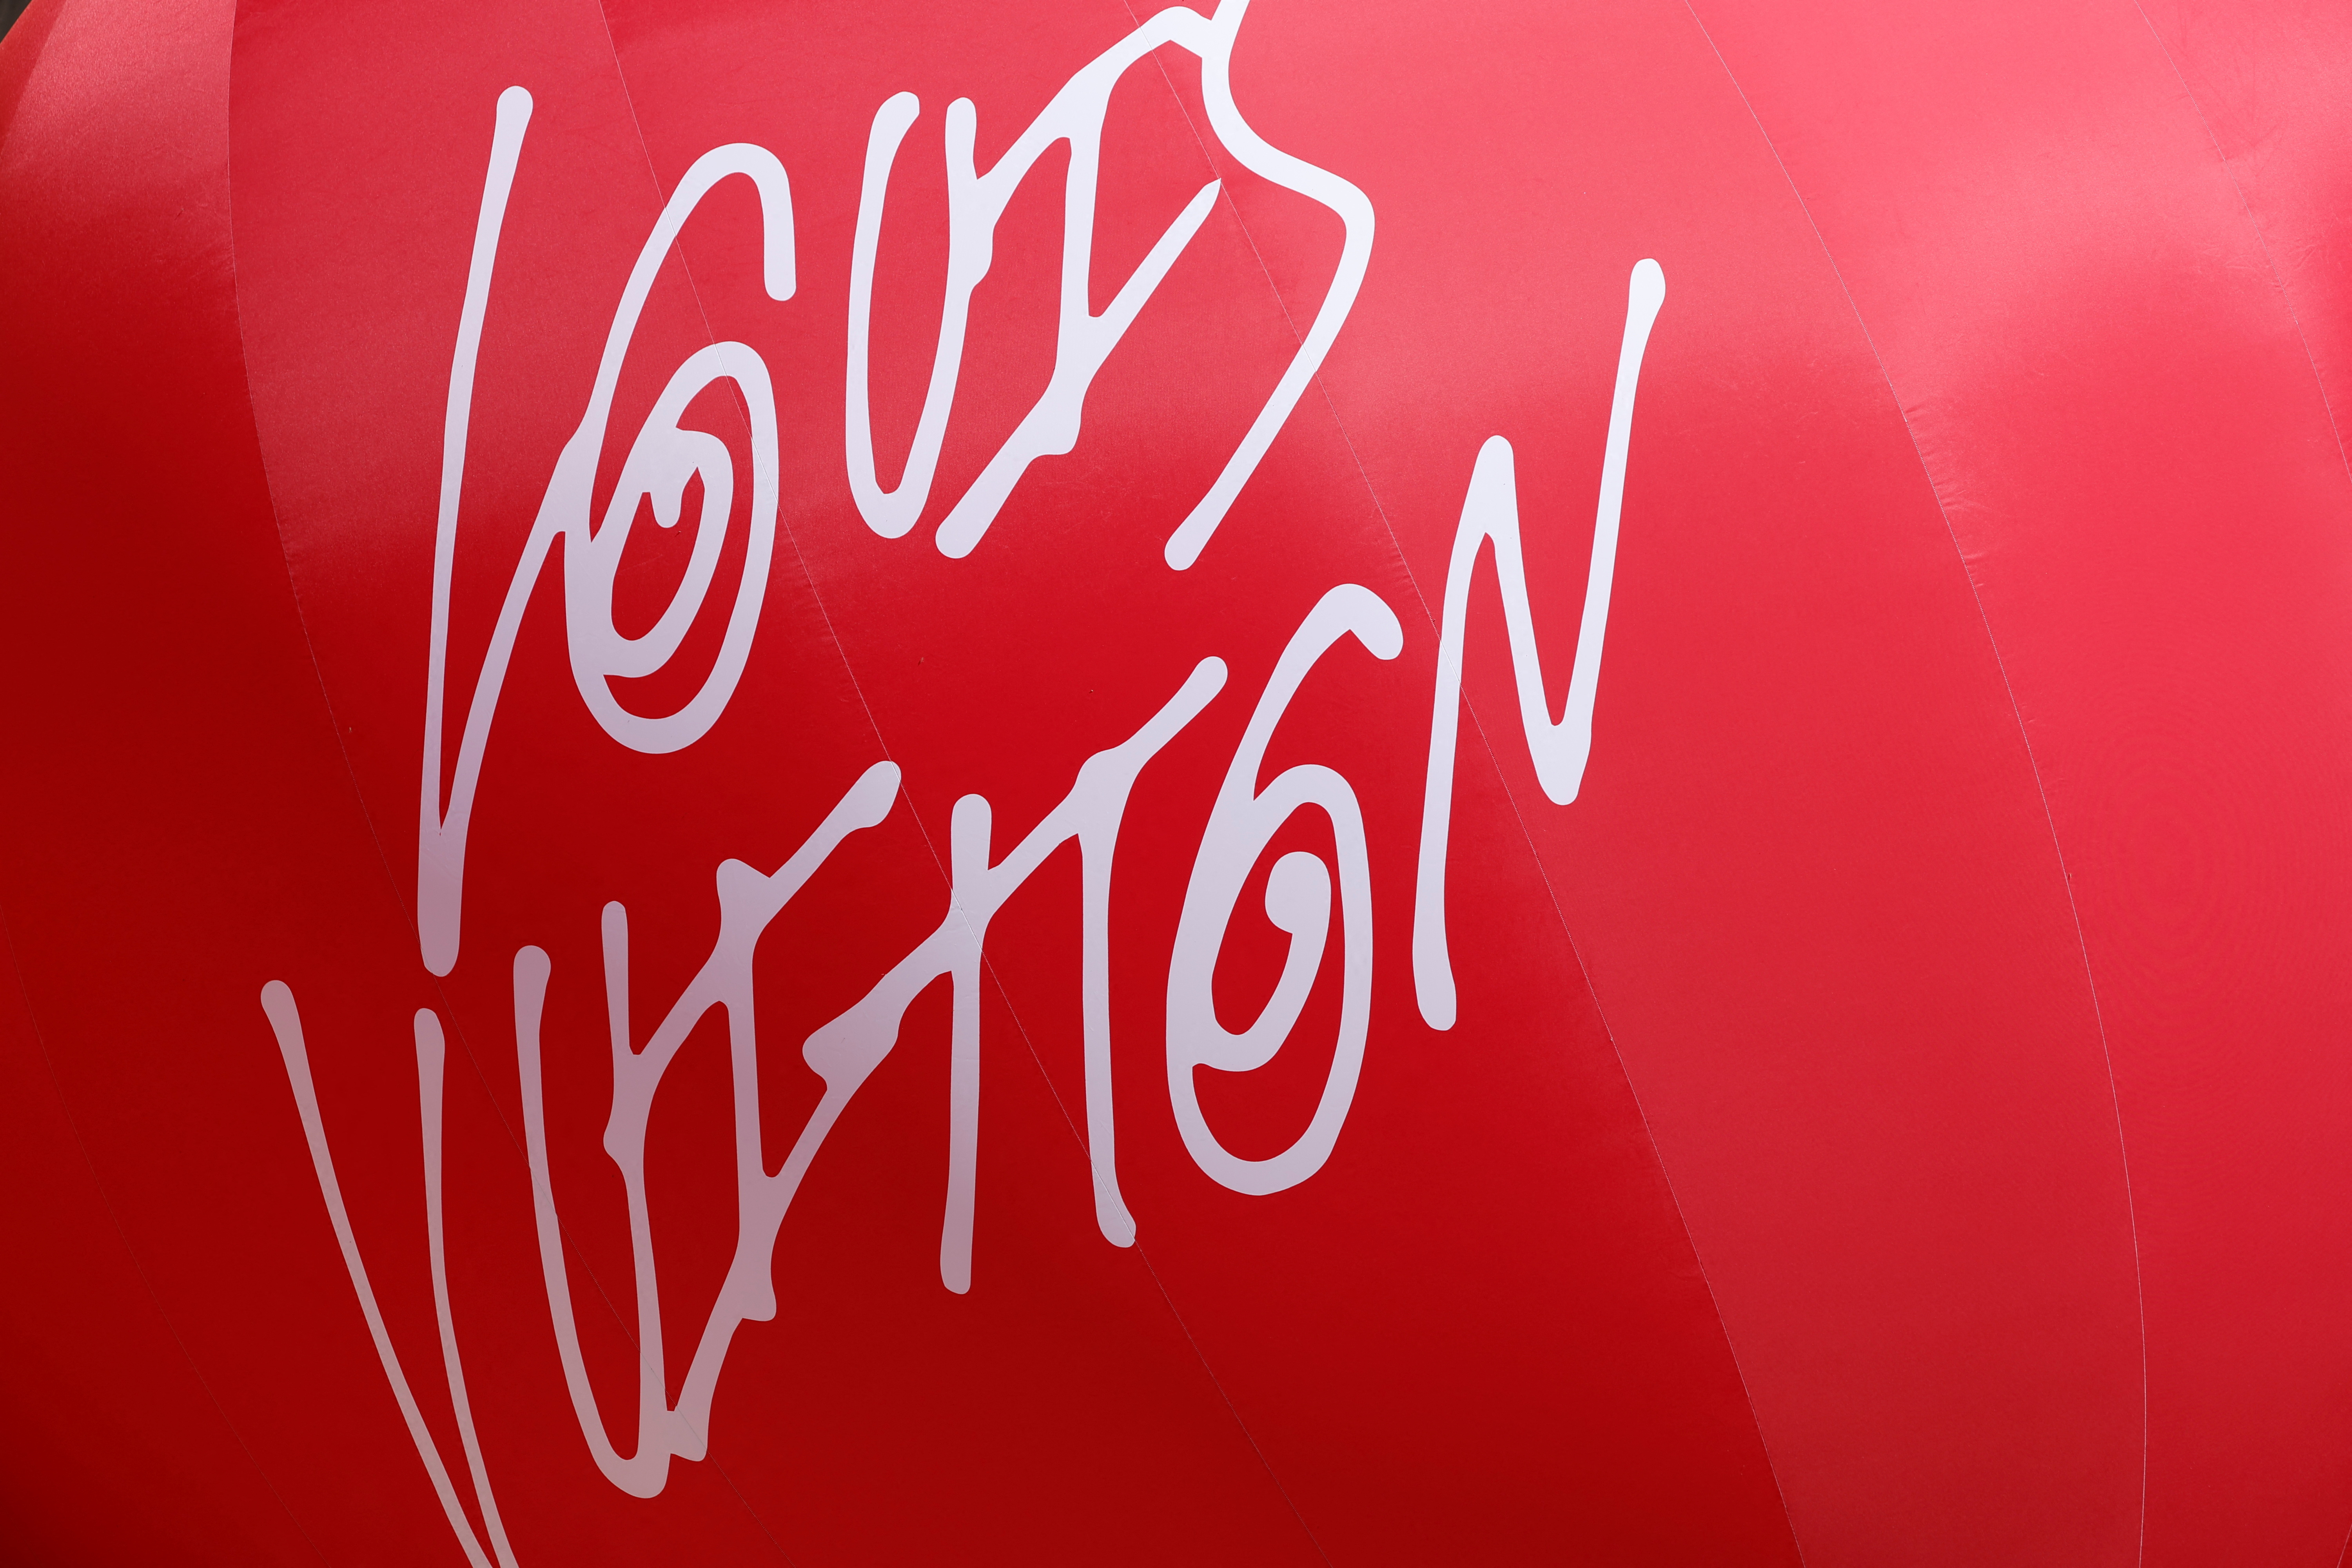 Sold at Auction: Louis Vuitton Hot Air Balloon